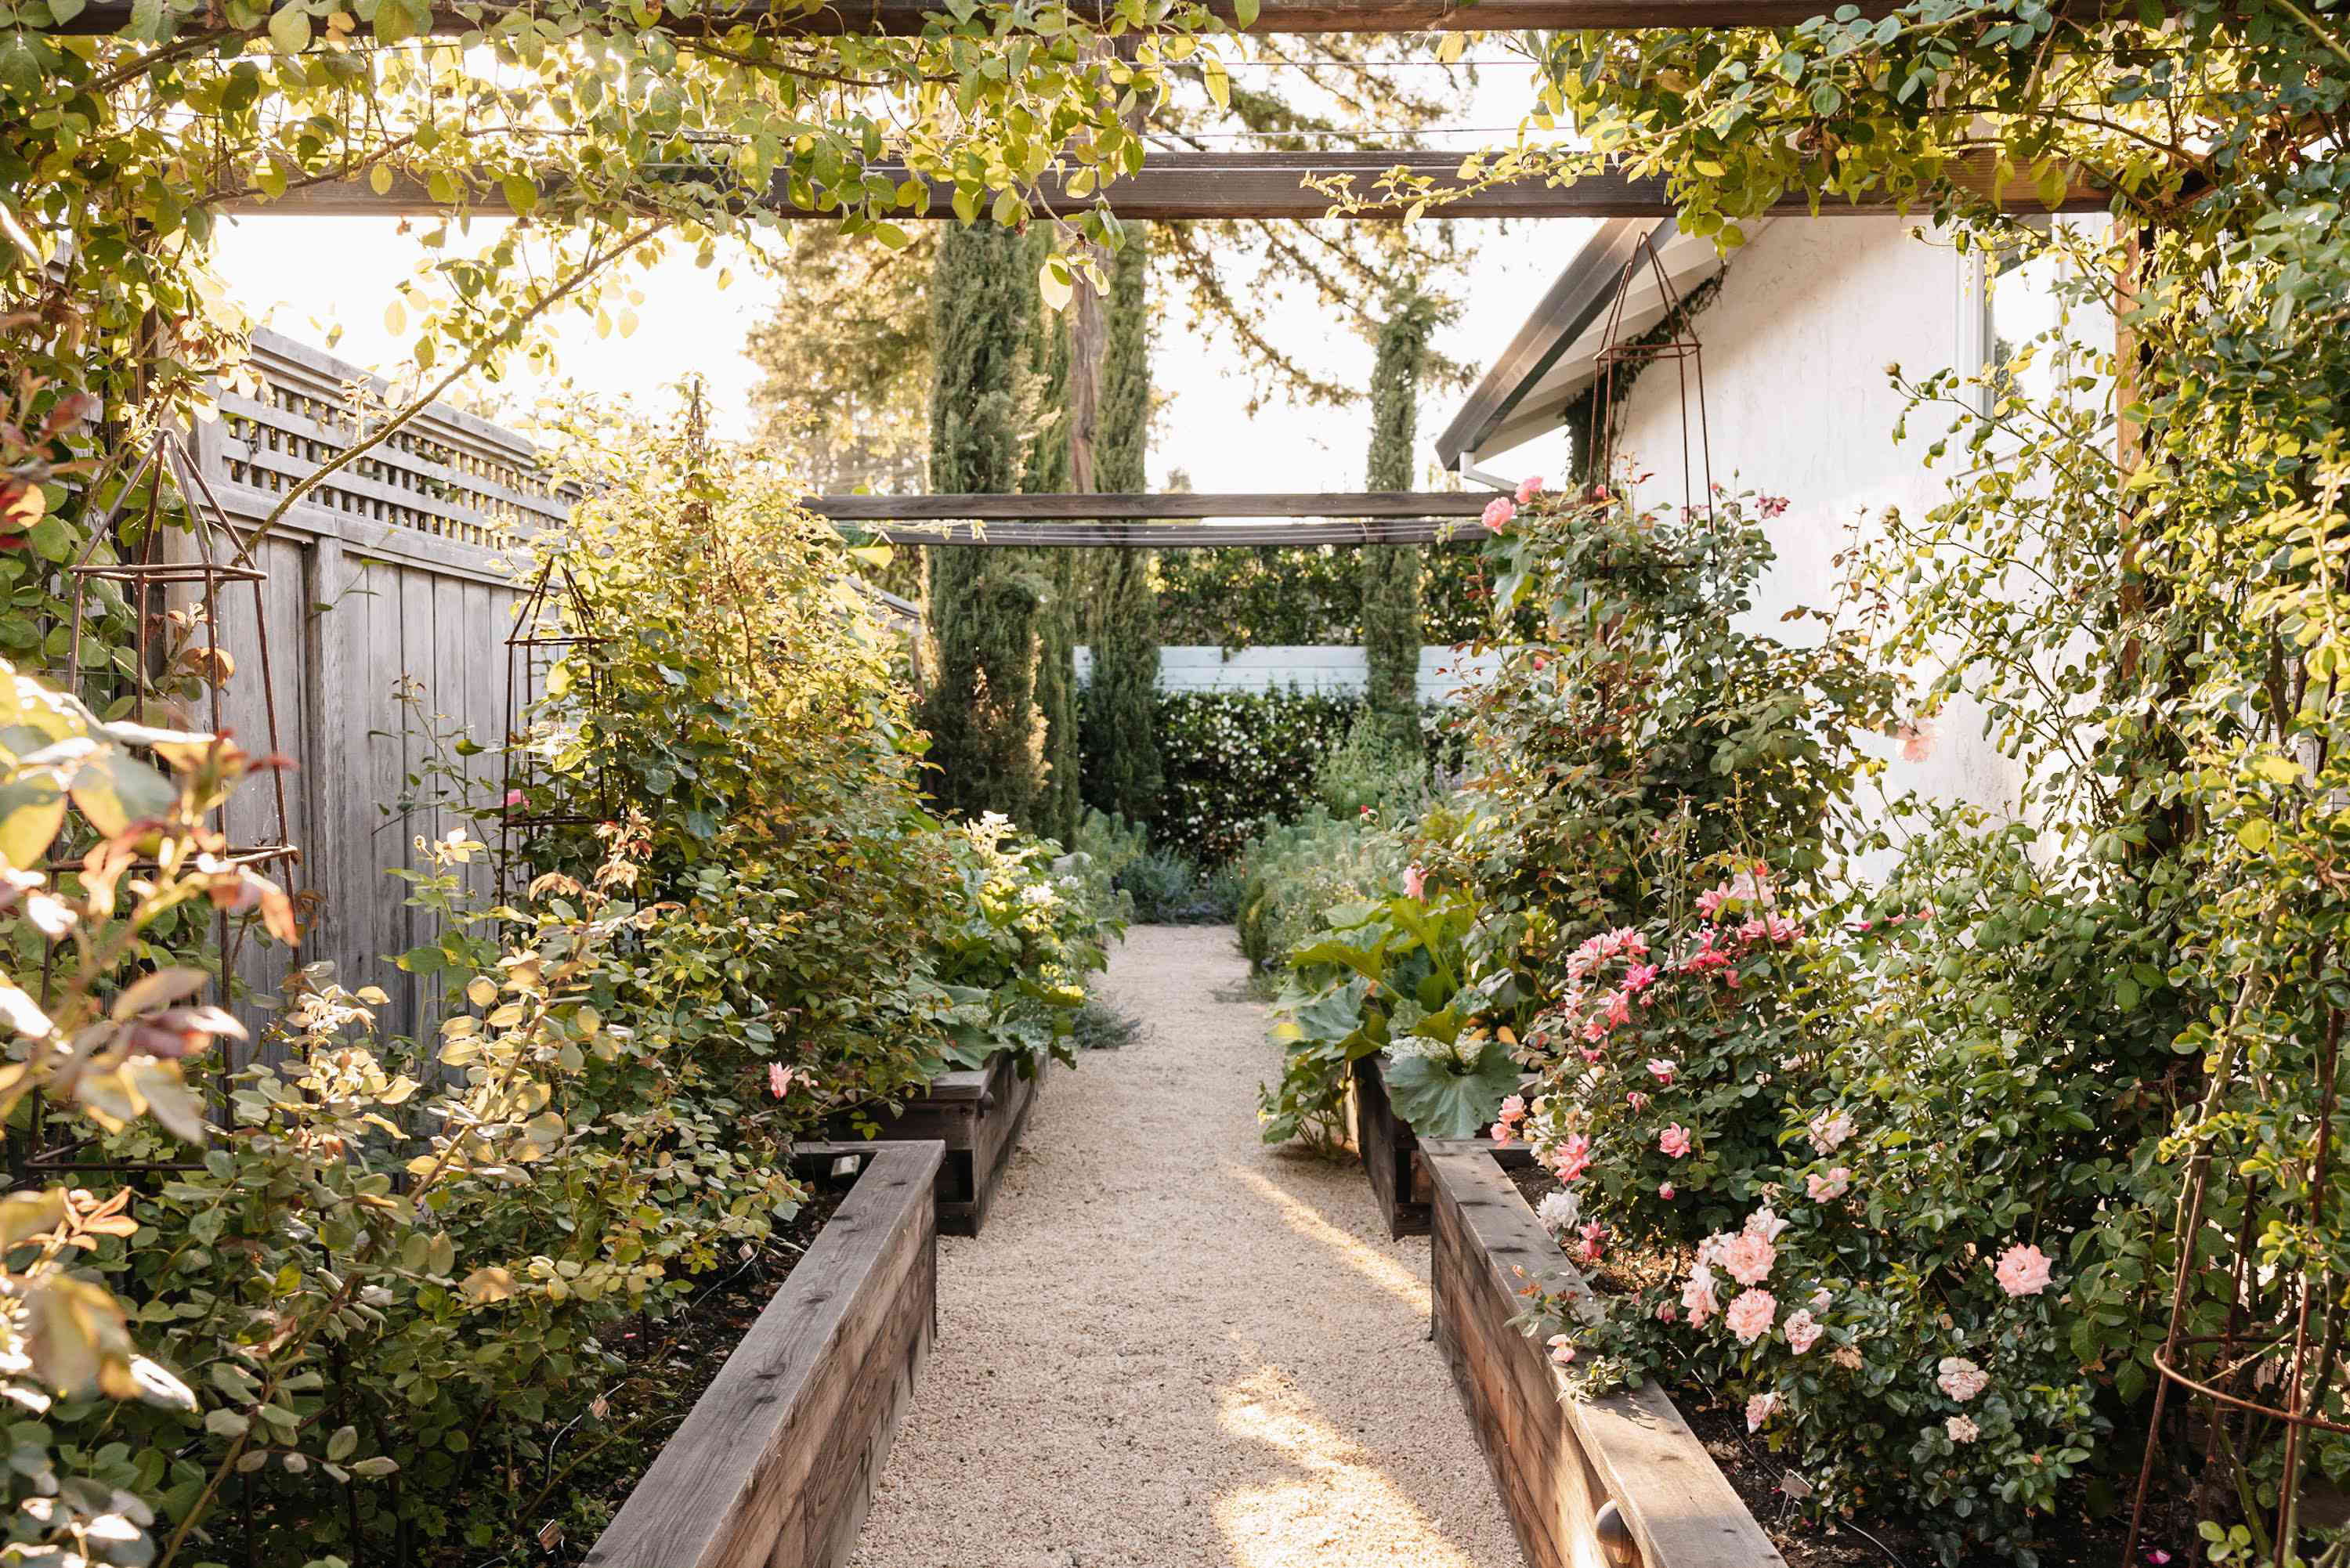 14 Cheap DIY Garden Path Ideas for a Pretty, Budget-Friendly Walkway